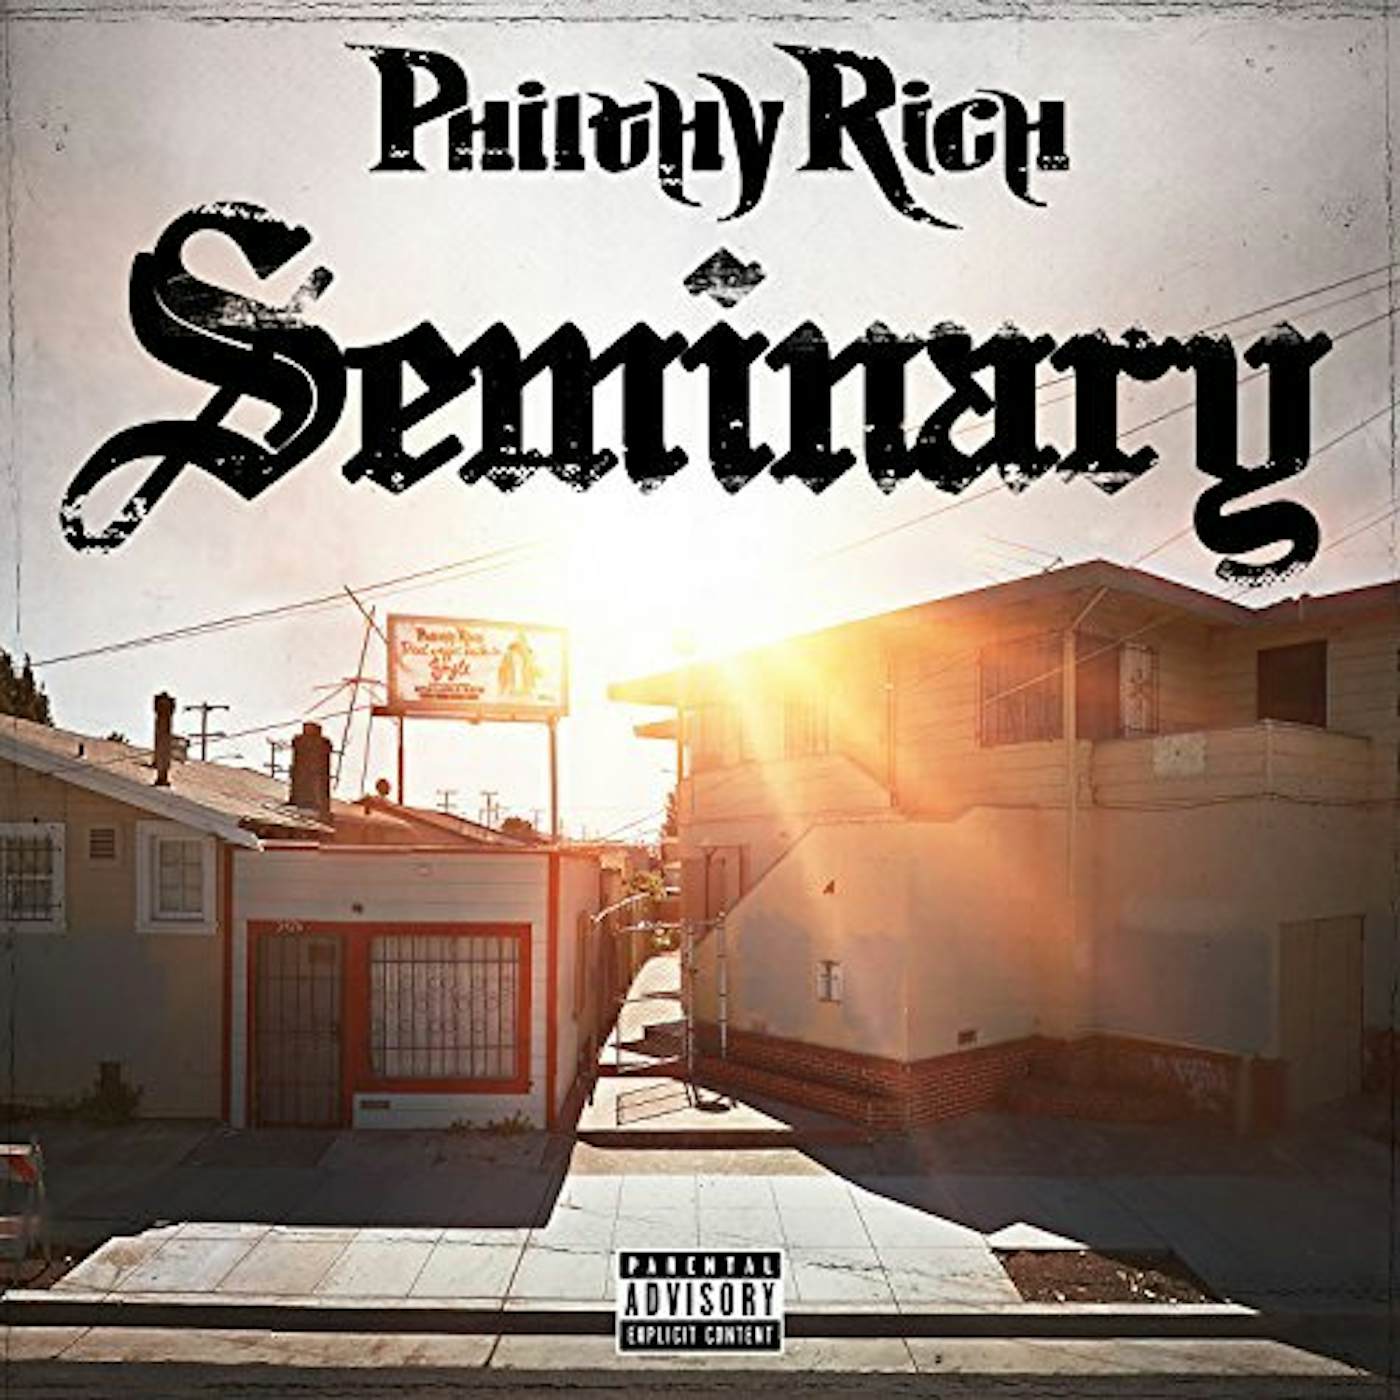 Philthy Rich SEMINARY CD